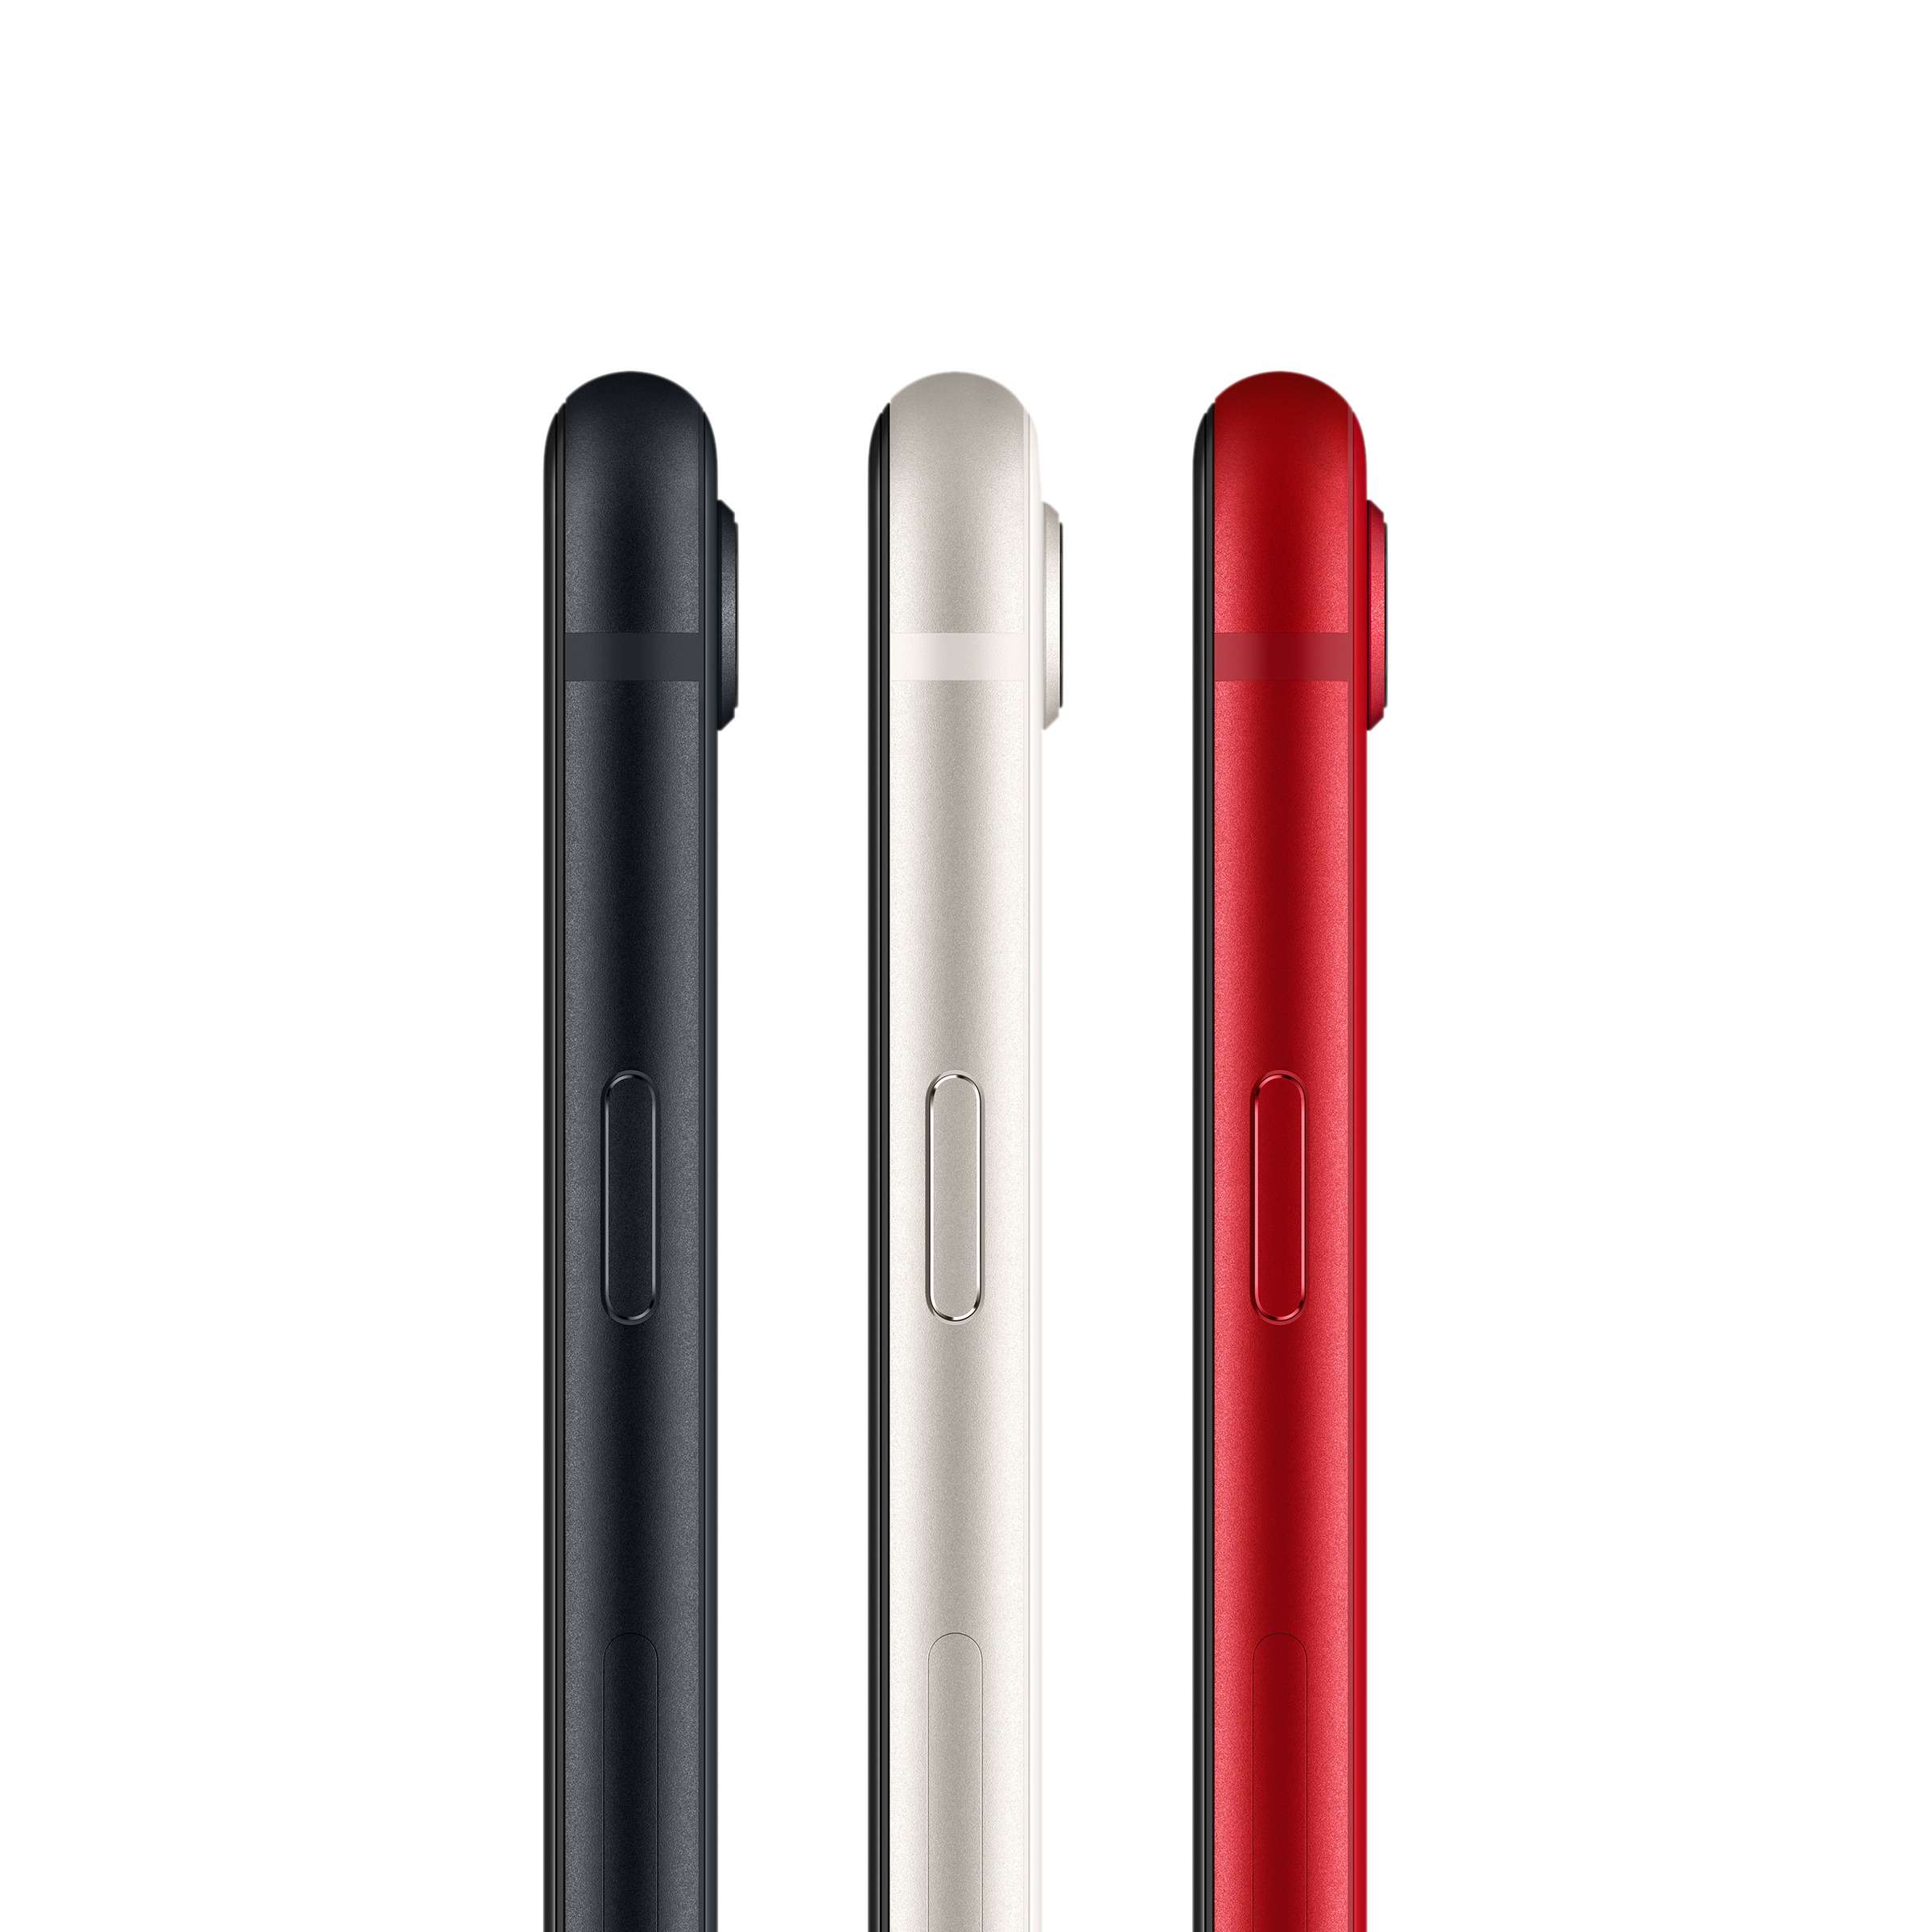 Verizon iPhone SE 3rd Generation 128GB Product(RED)